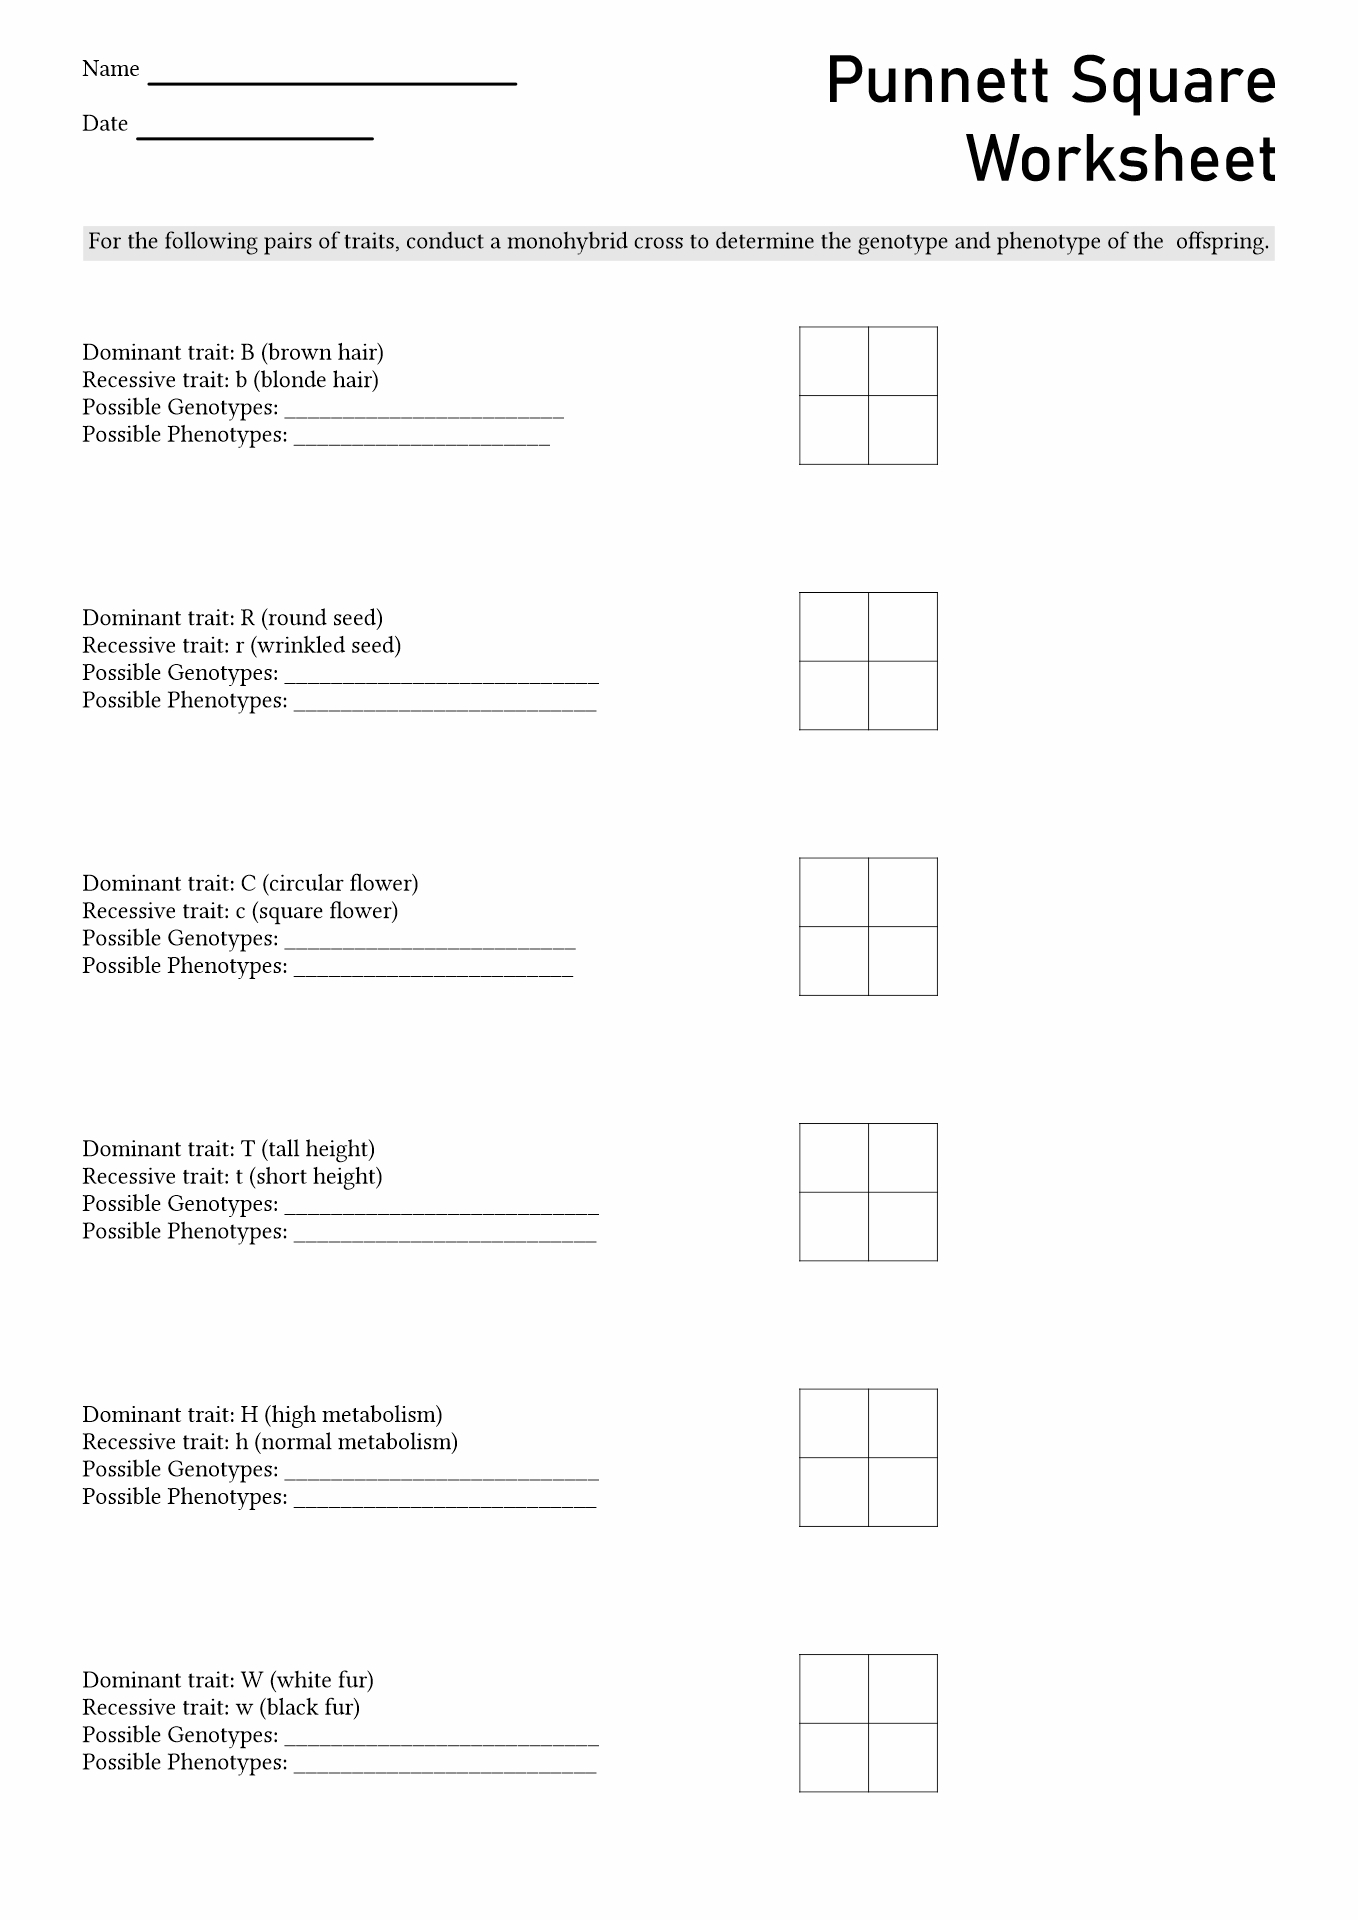 Punnett Square Practice Worksheet Answers Image